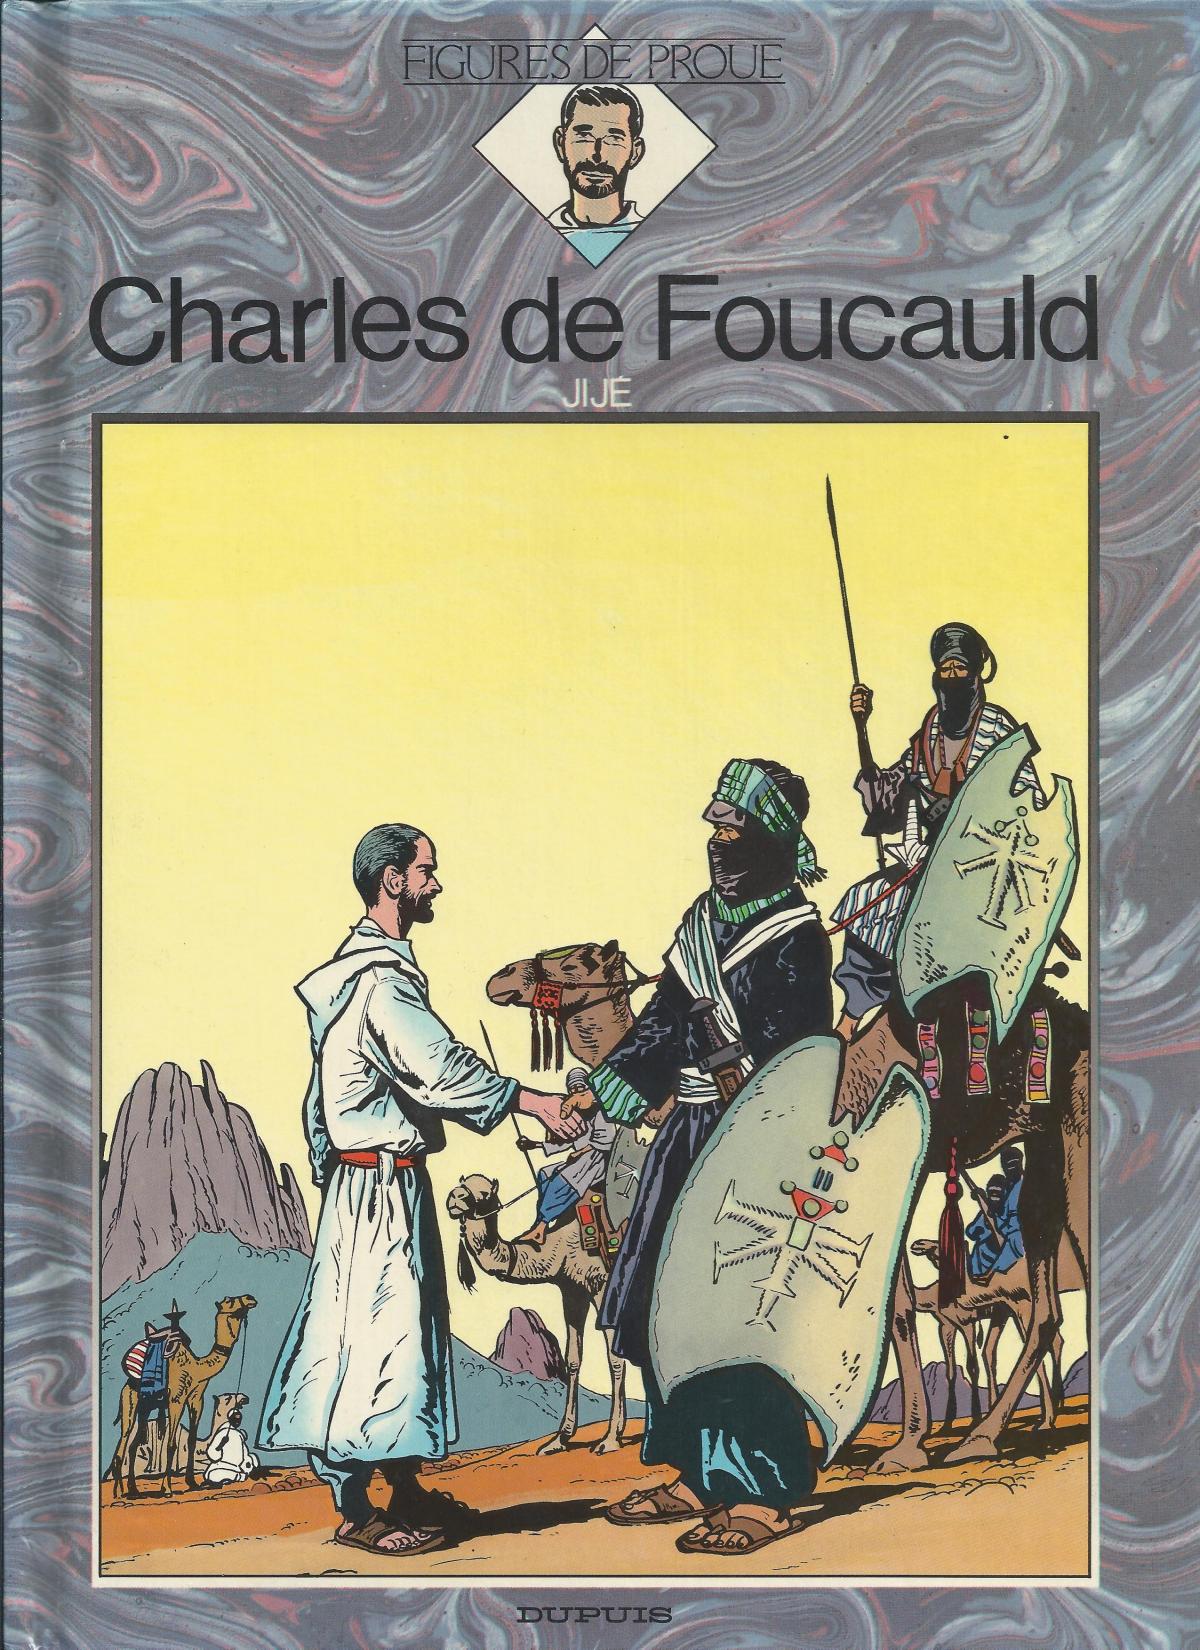 Charles de Foucauld, Figure de proue